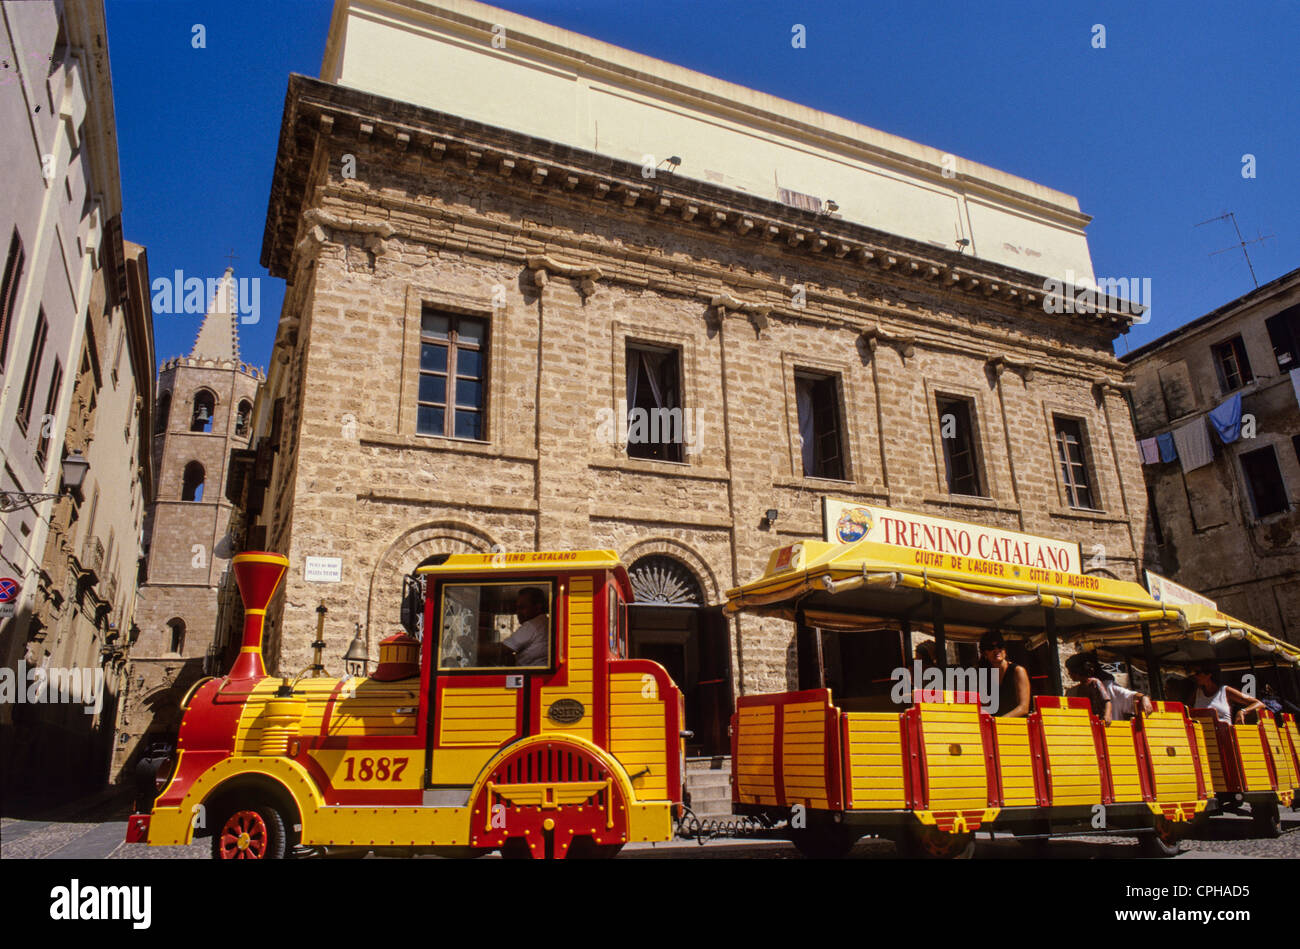 Europe Italy Province of Sassari Sardinia Alghero Catalan train in Piazza Vittorio Emanuele II Stock Photo